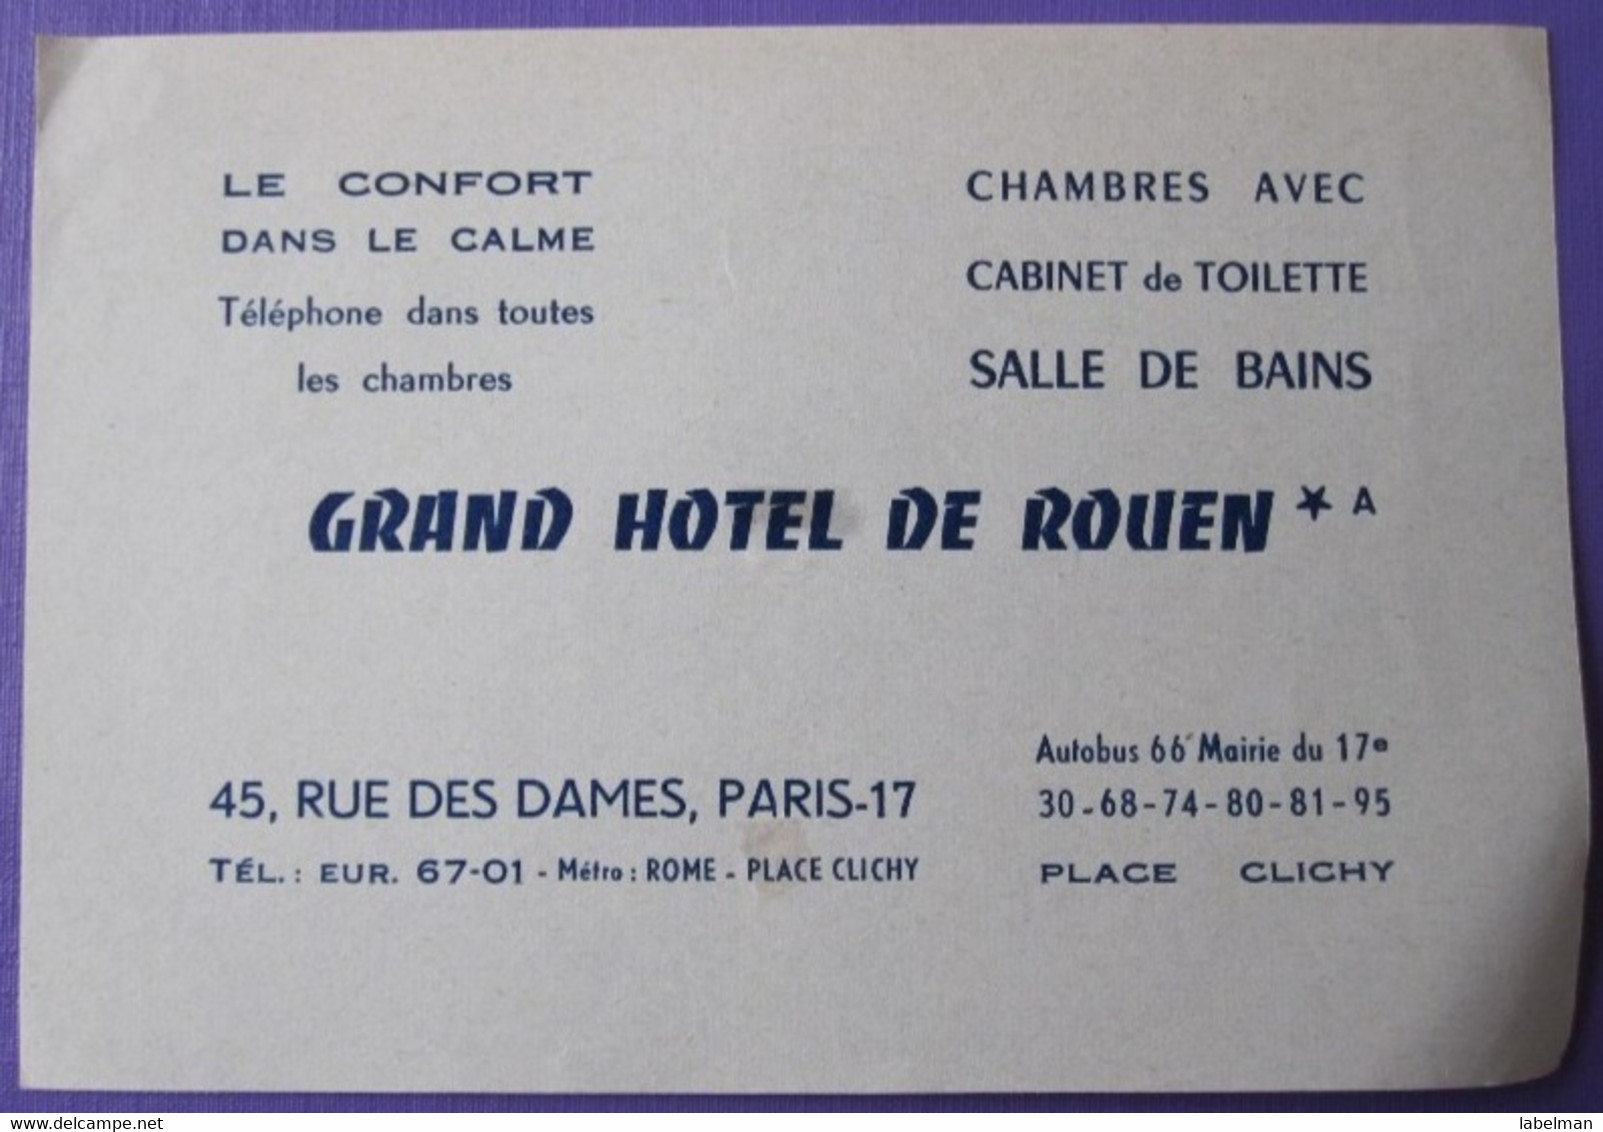 HOTEL AUBERGE RESIDENCE ROUEN DECAL PARIS FRANCE STICKER LUGGAGE LABEL ETIQUETA ETICHETTA ETIQUETTE AUFKLEBER - Hotel Labels